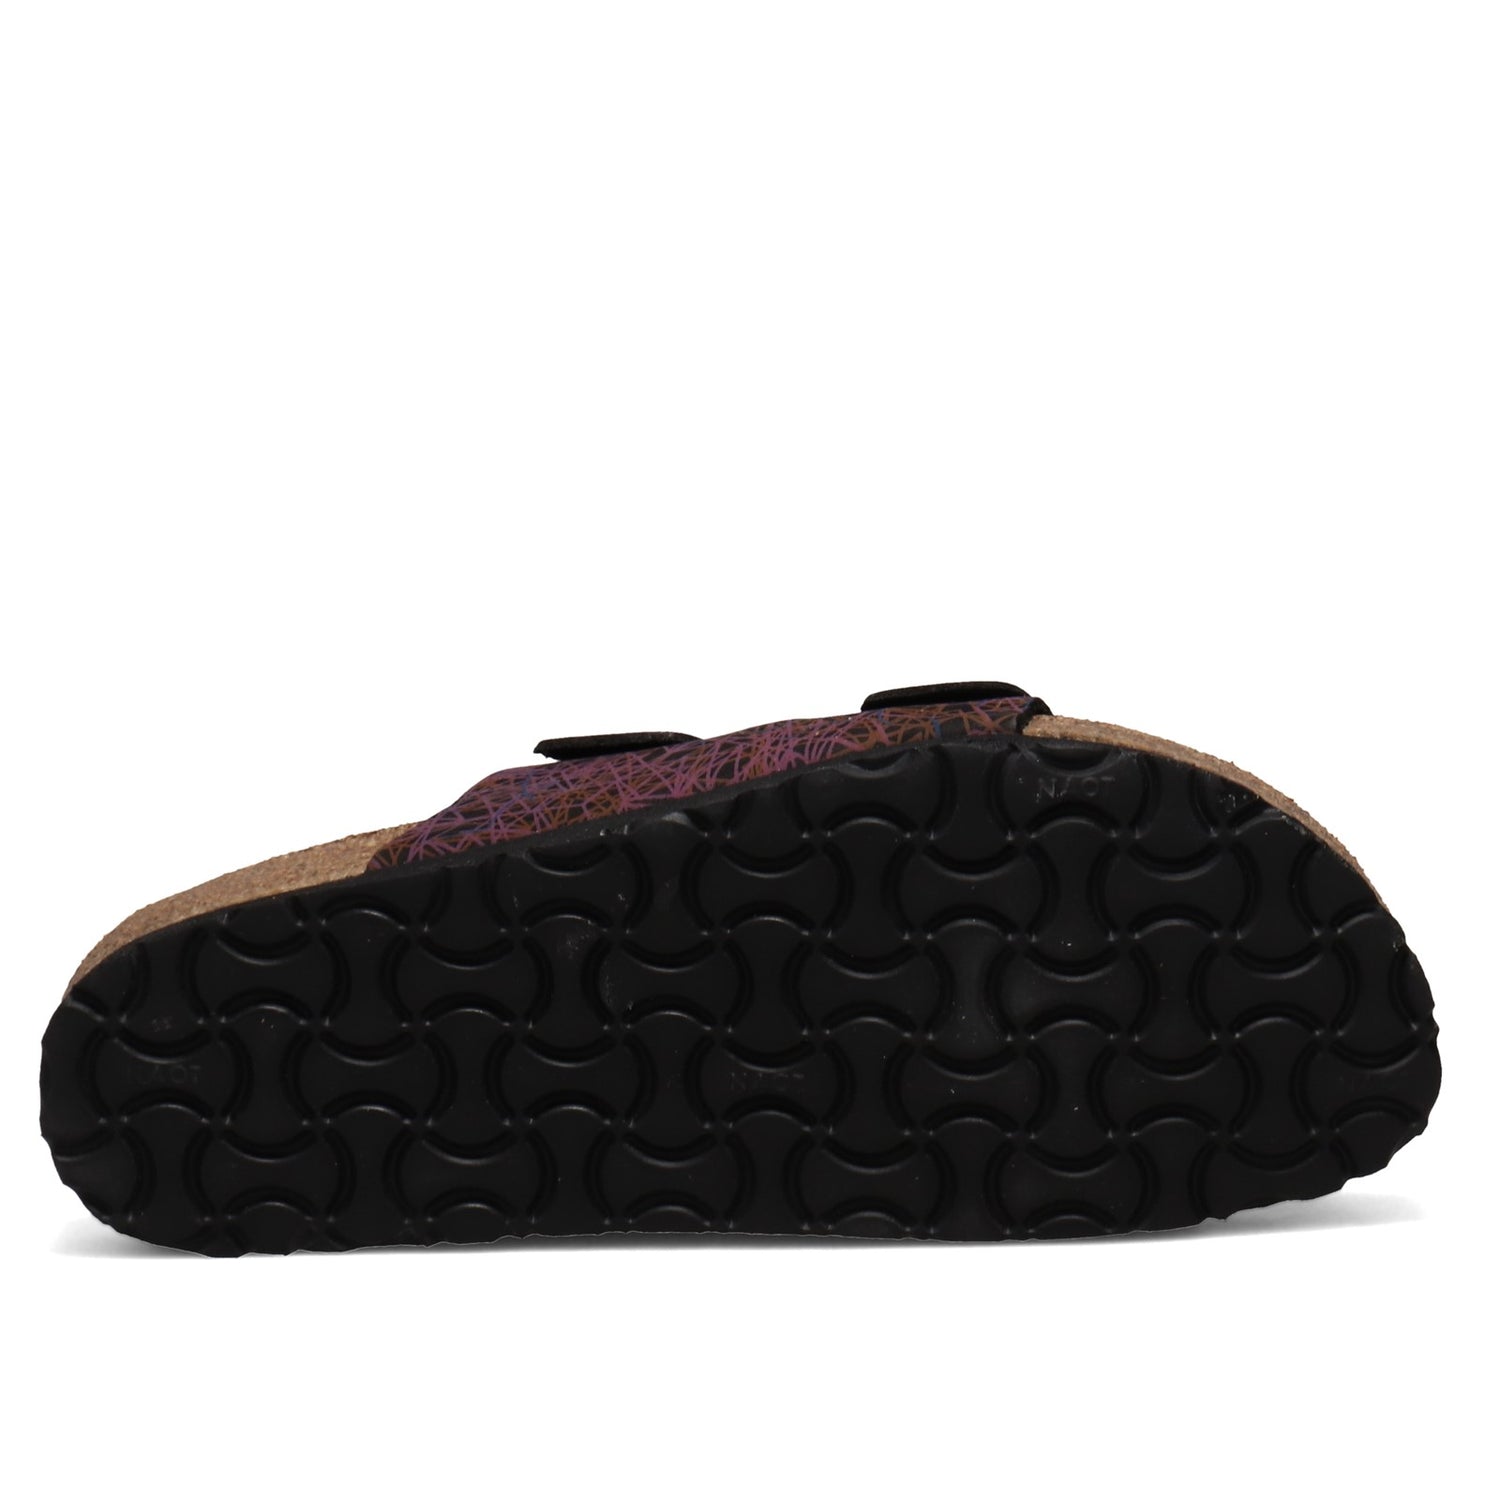 Peltz Shoes  Women's Naot Santa Barbara Sandal BORDEAUX 7500-B35